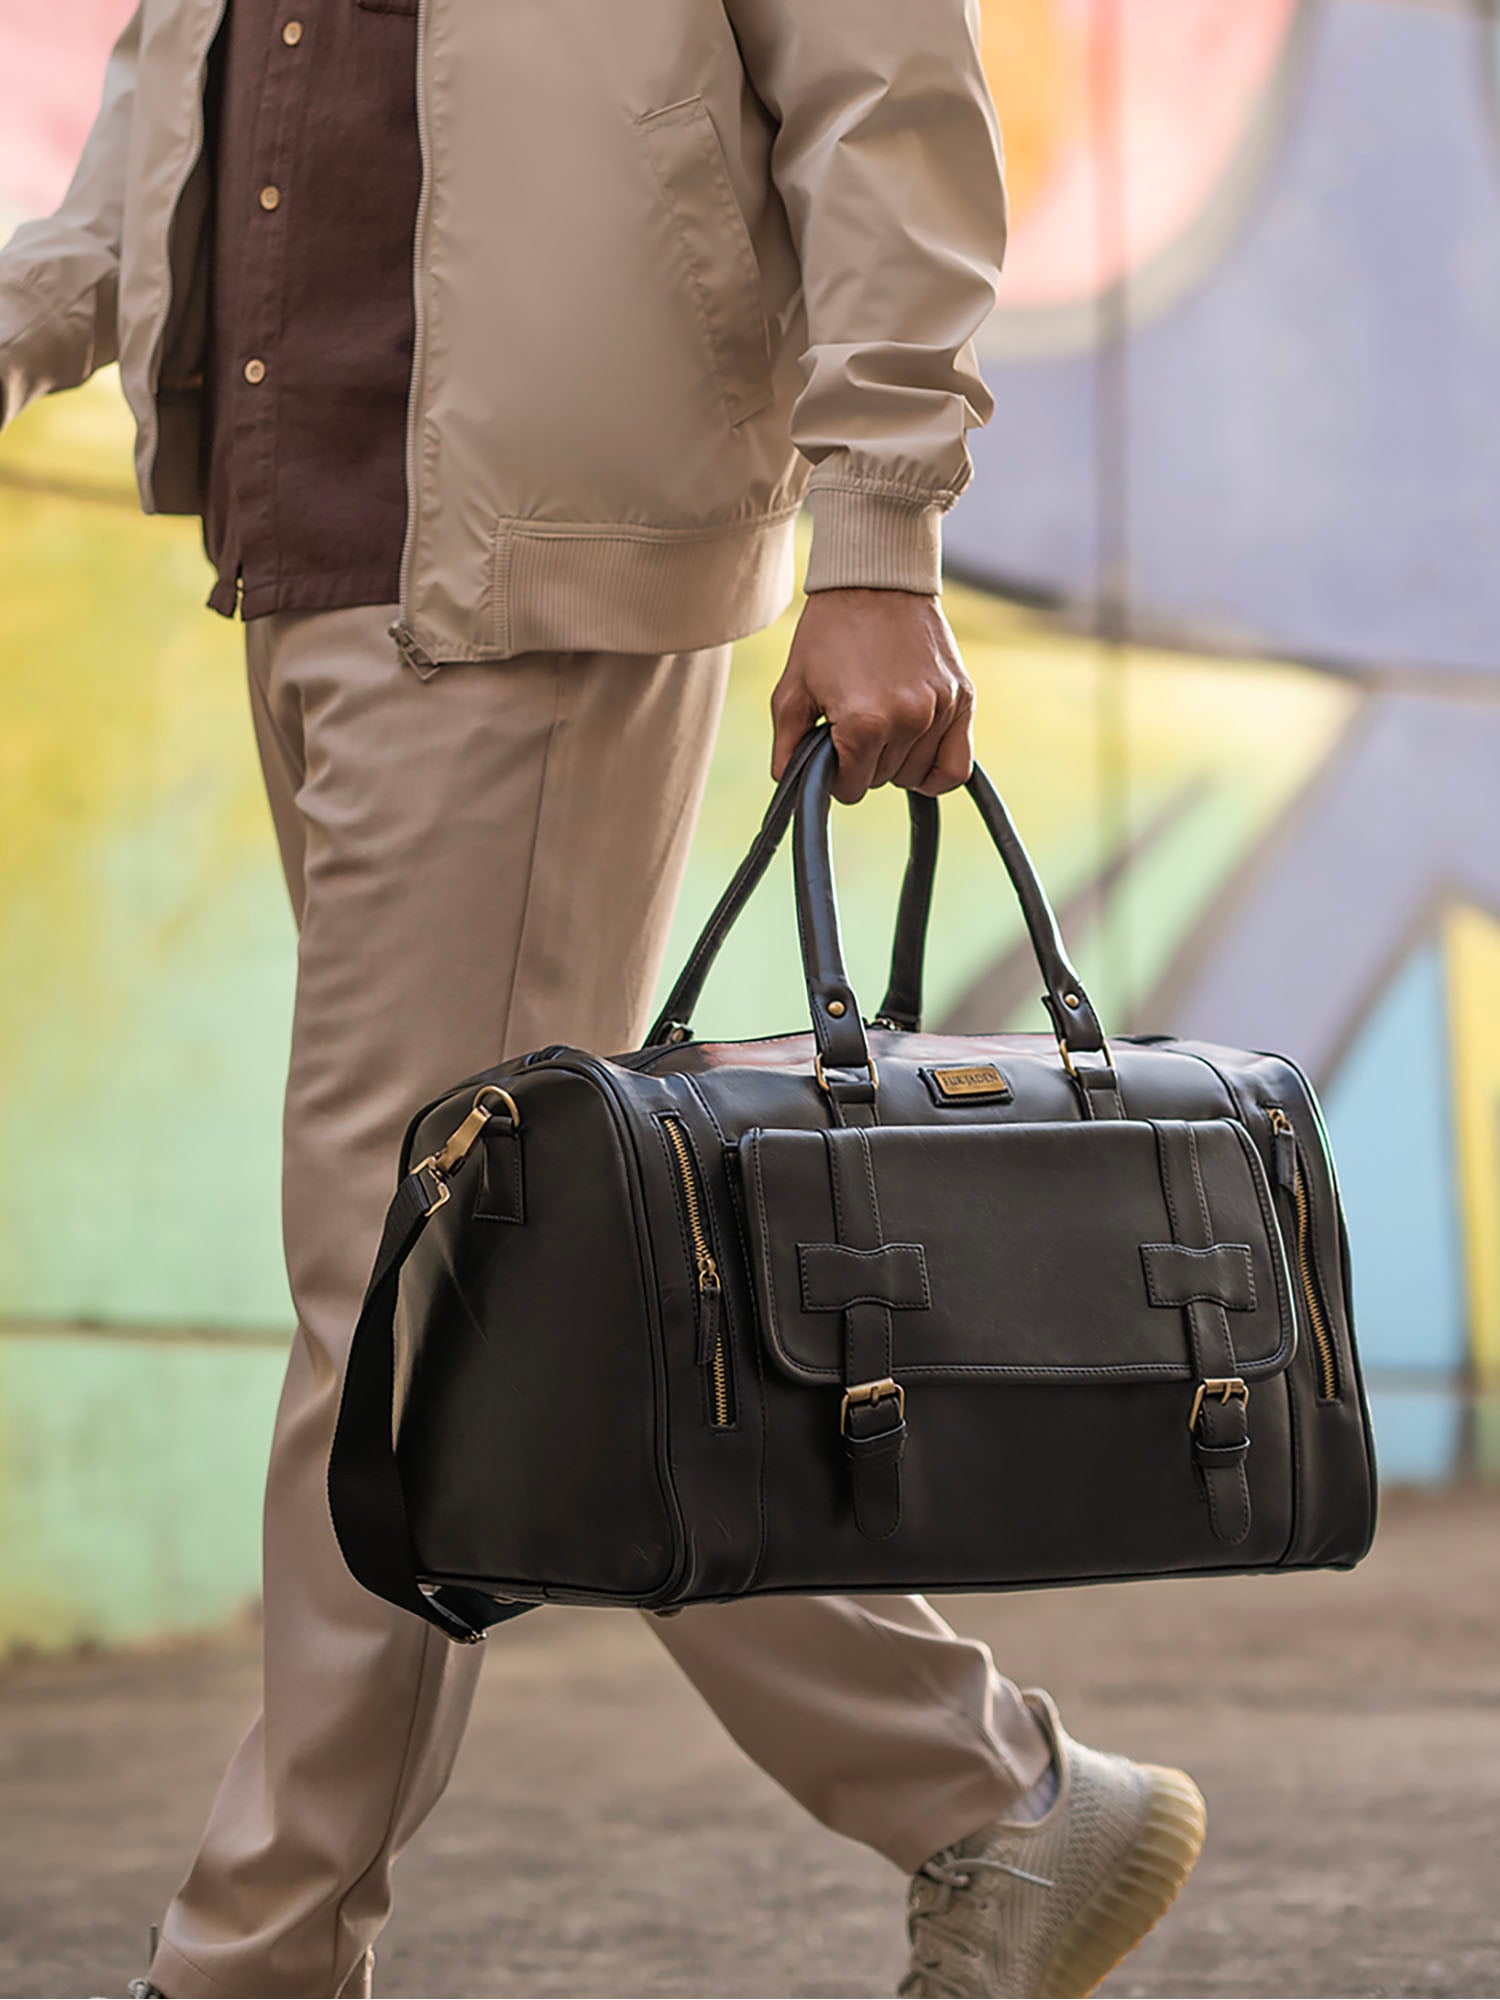 Fur Jaden Black Travel Duffle Bag With External Shoe Pocket – Fur